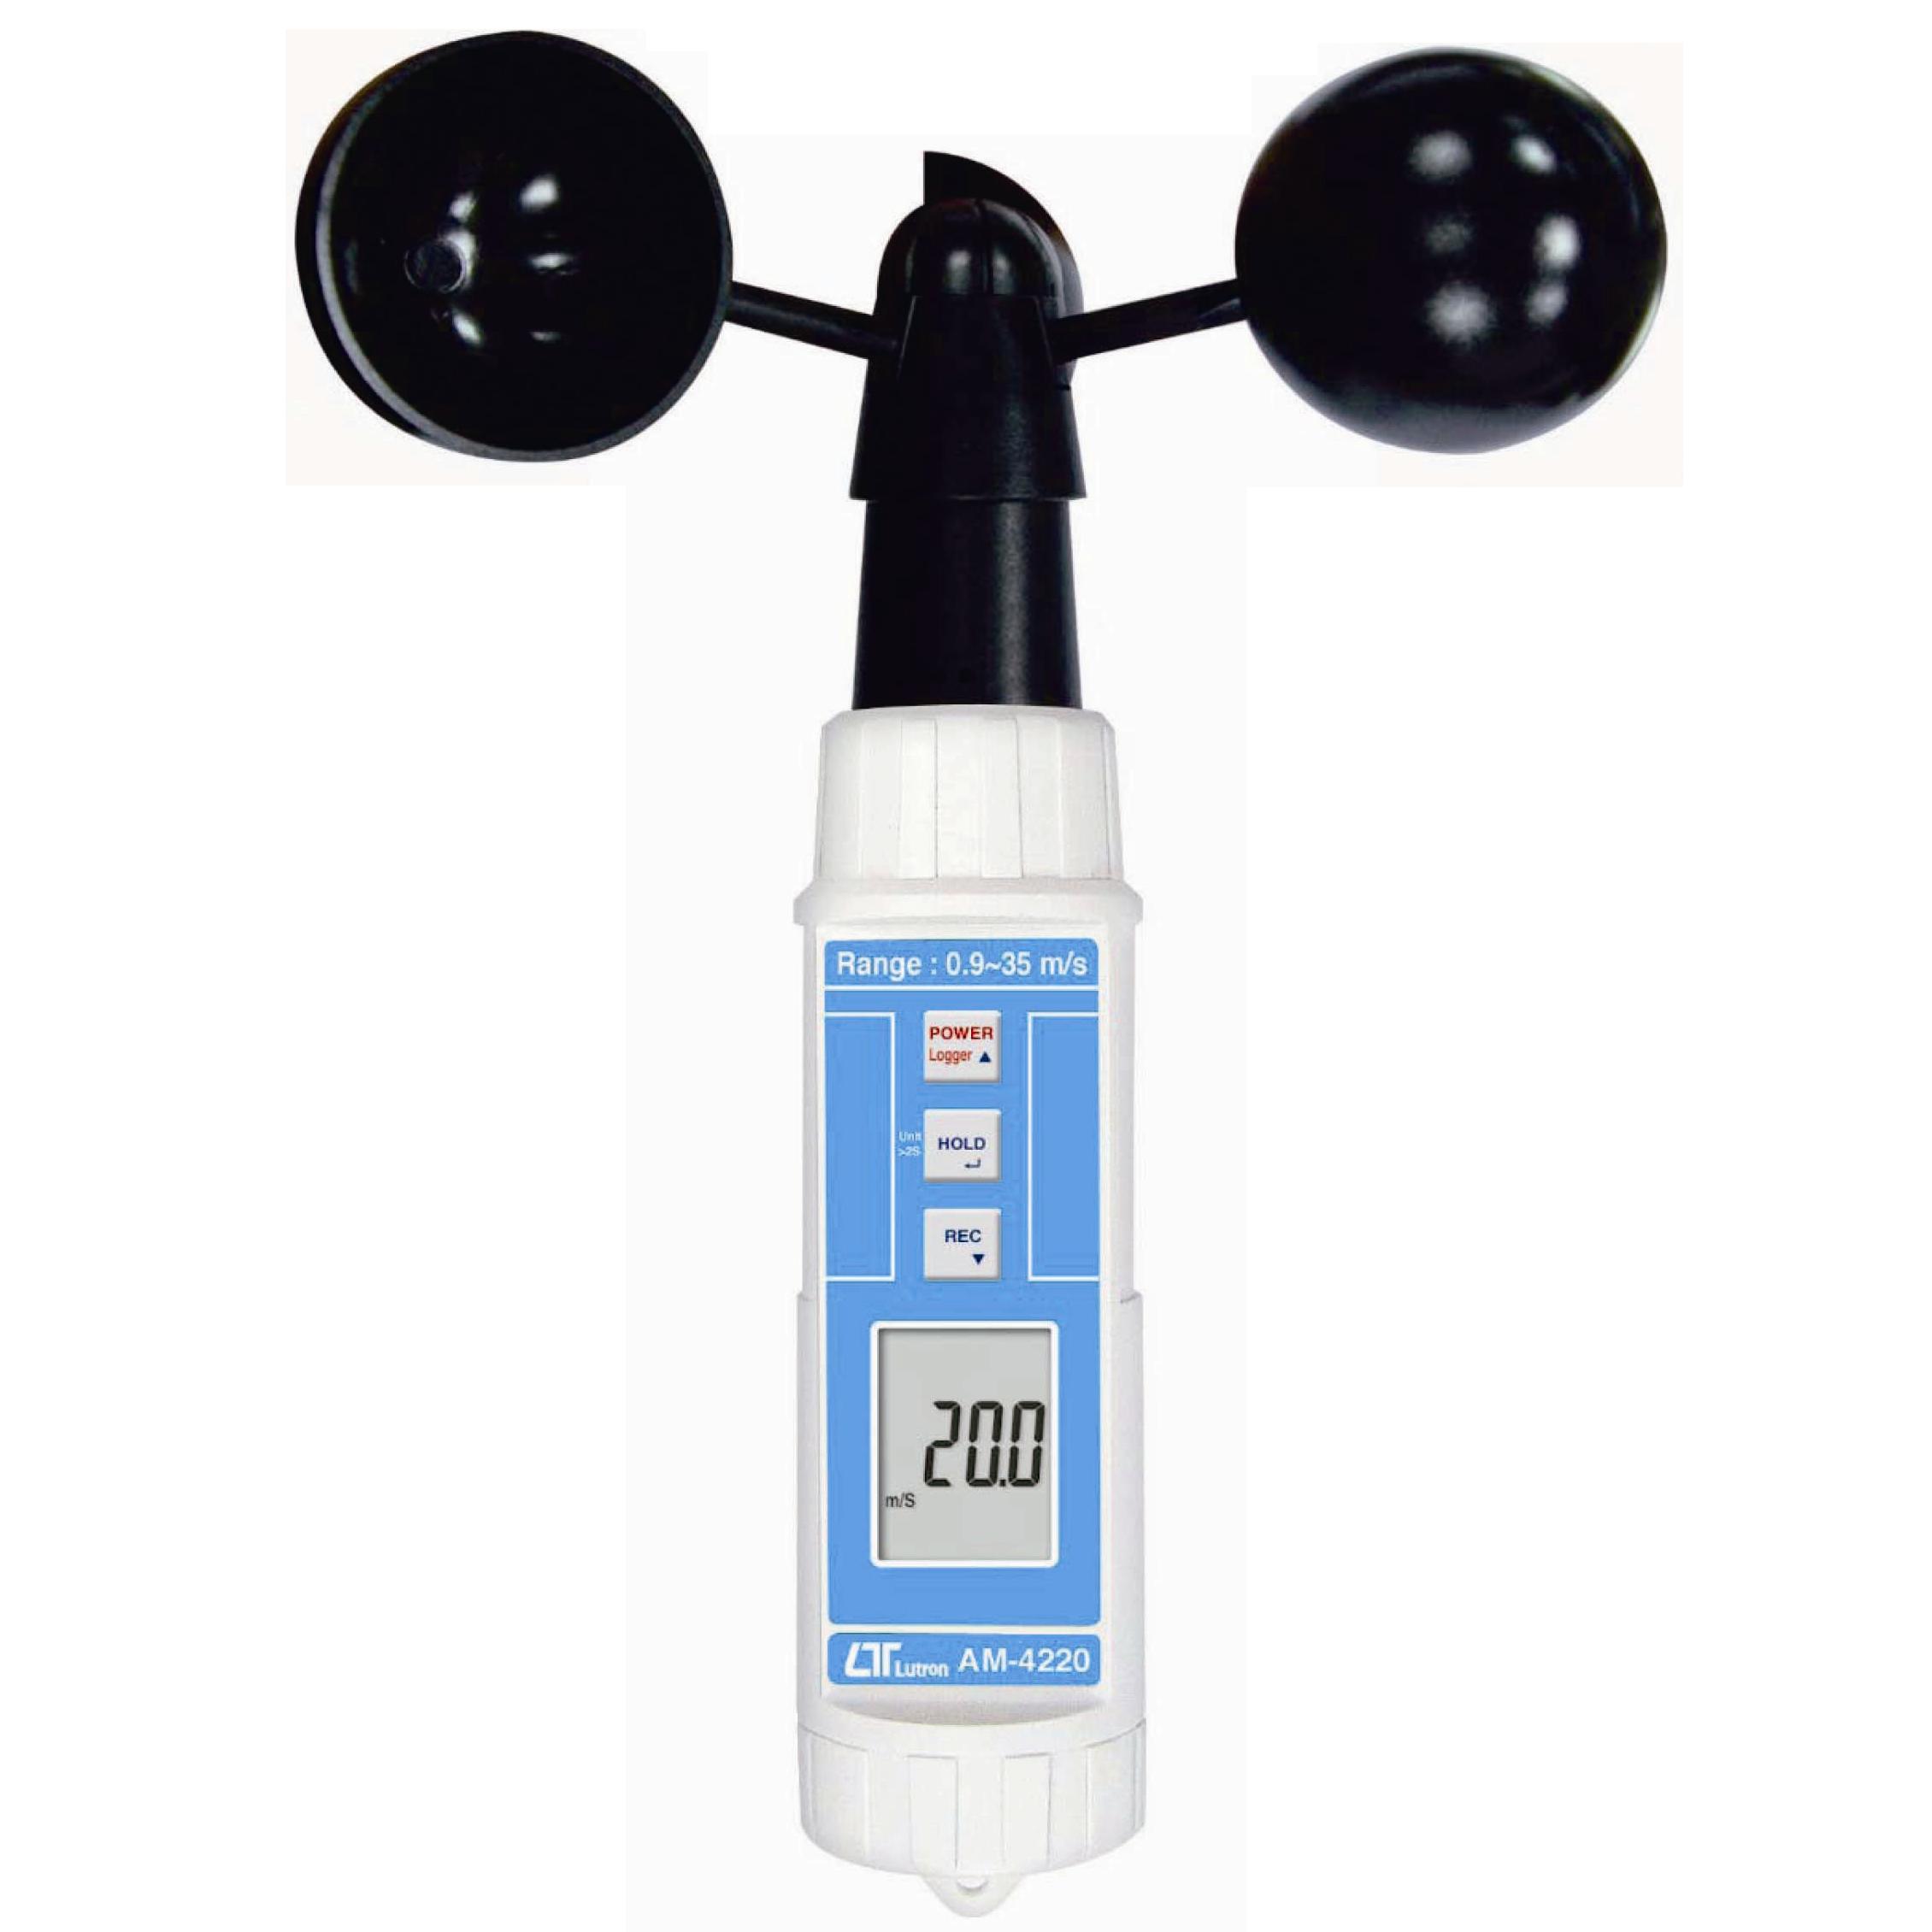 【AM-4220】デジタルハンディ風杯式風速計